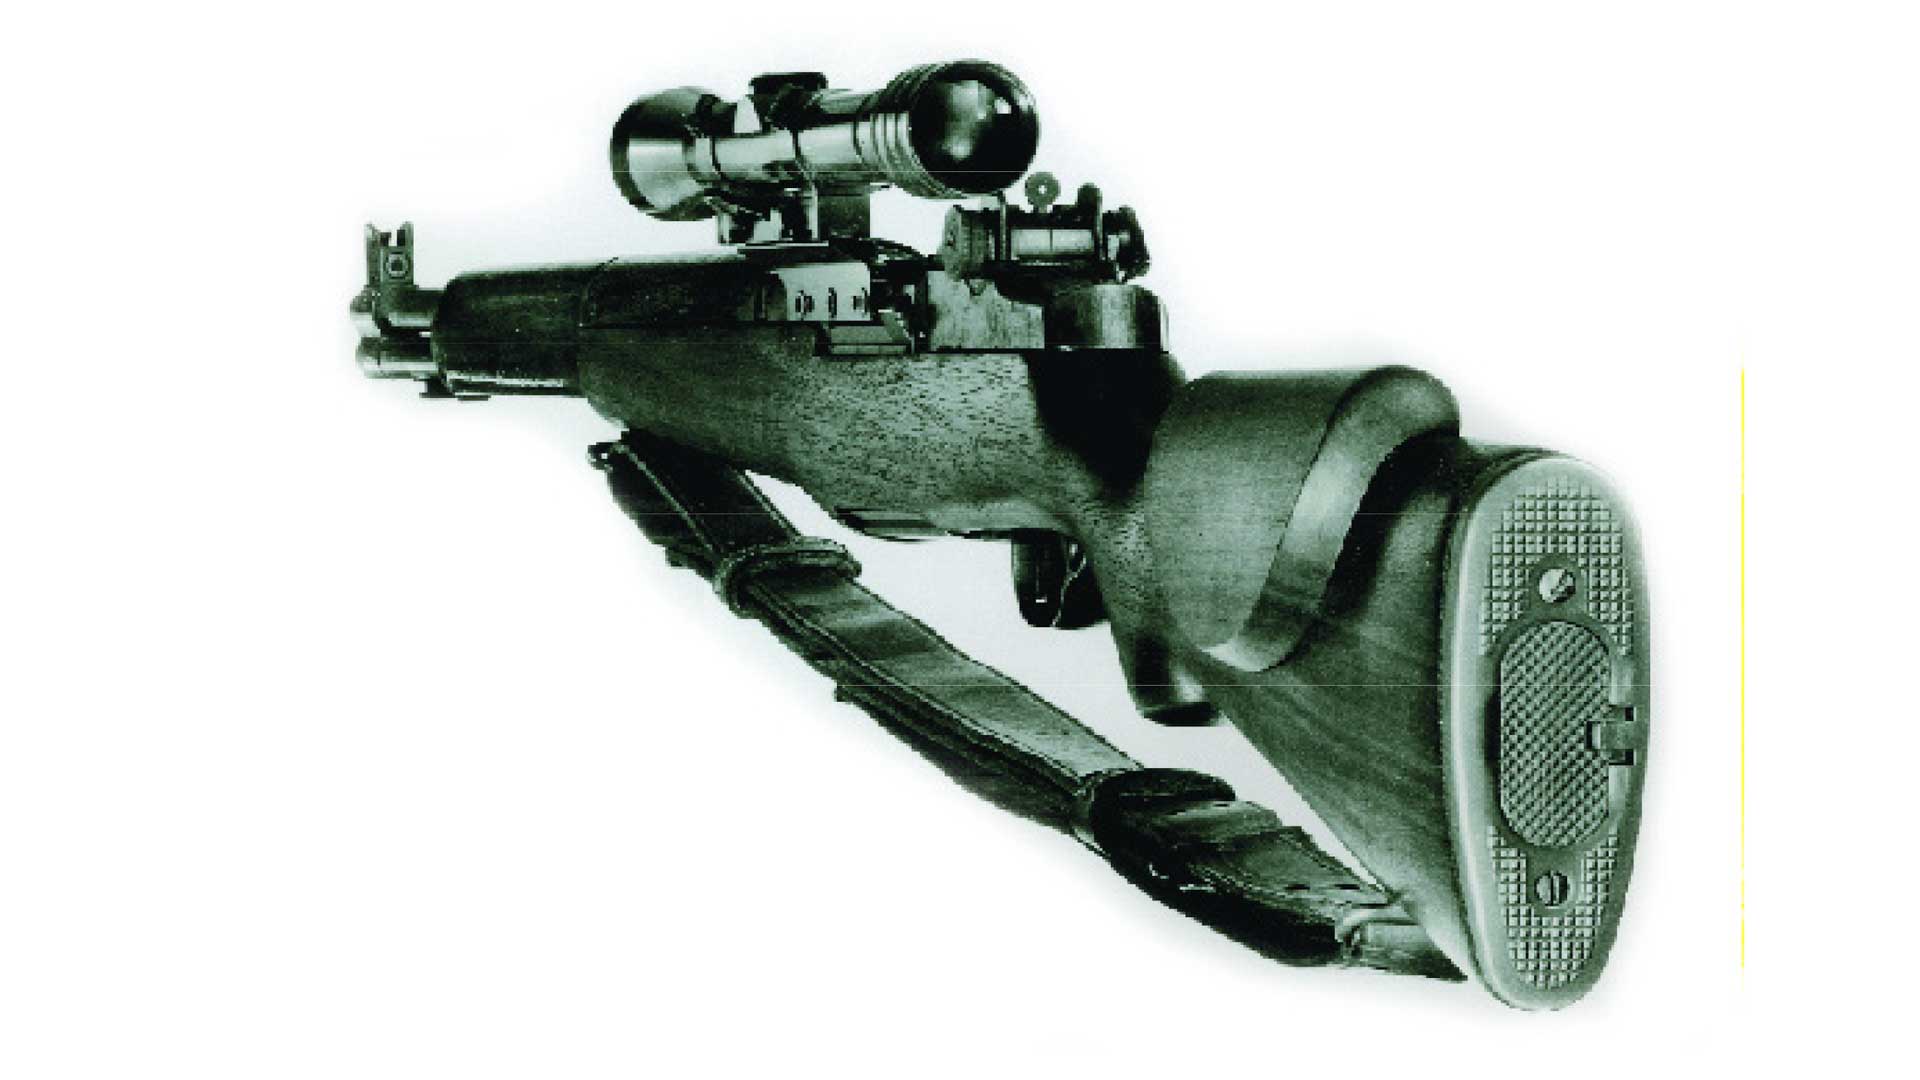 rifle wood gun stock scope leather sling